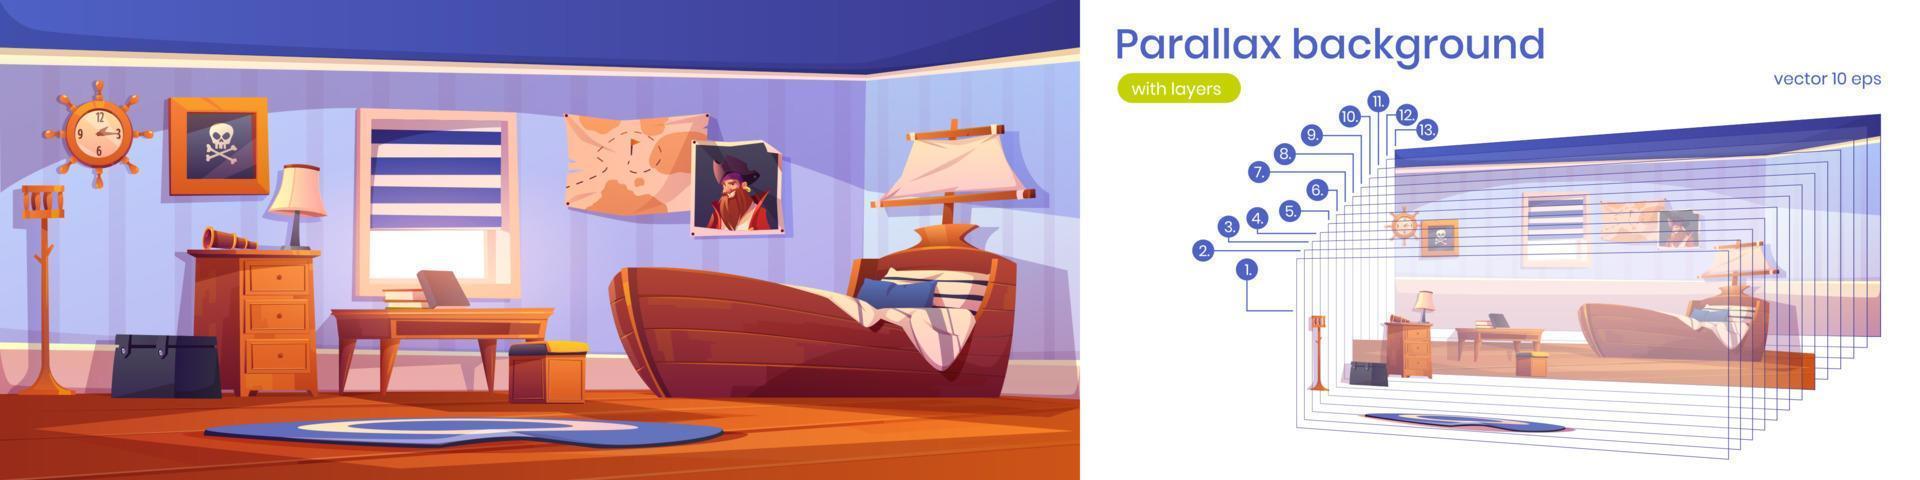 parallax bakgrund med sovrum i pirat stil vektor